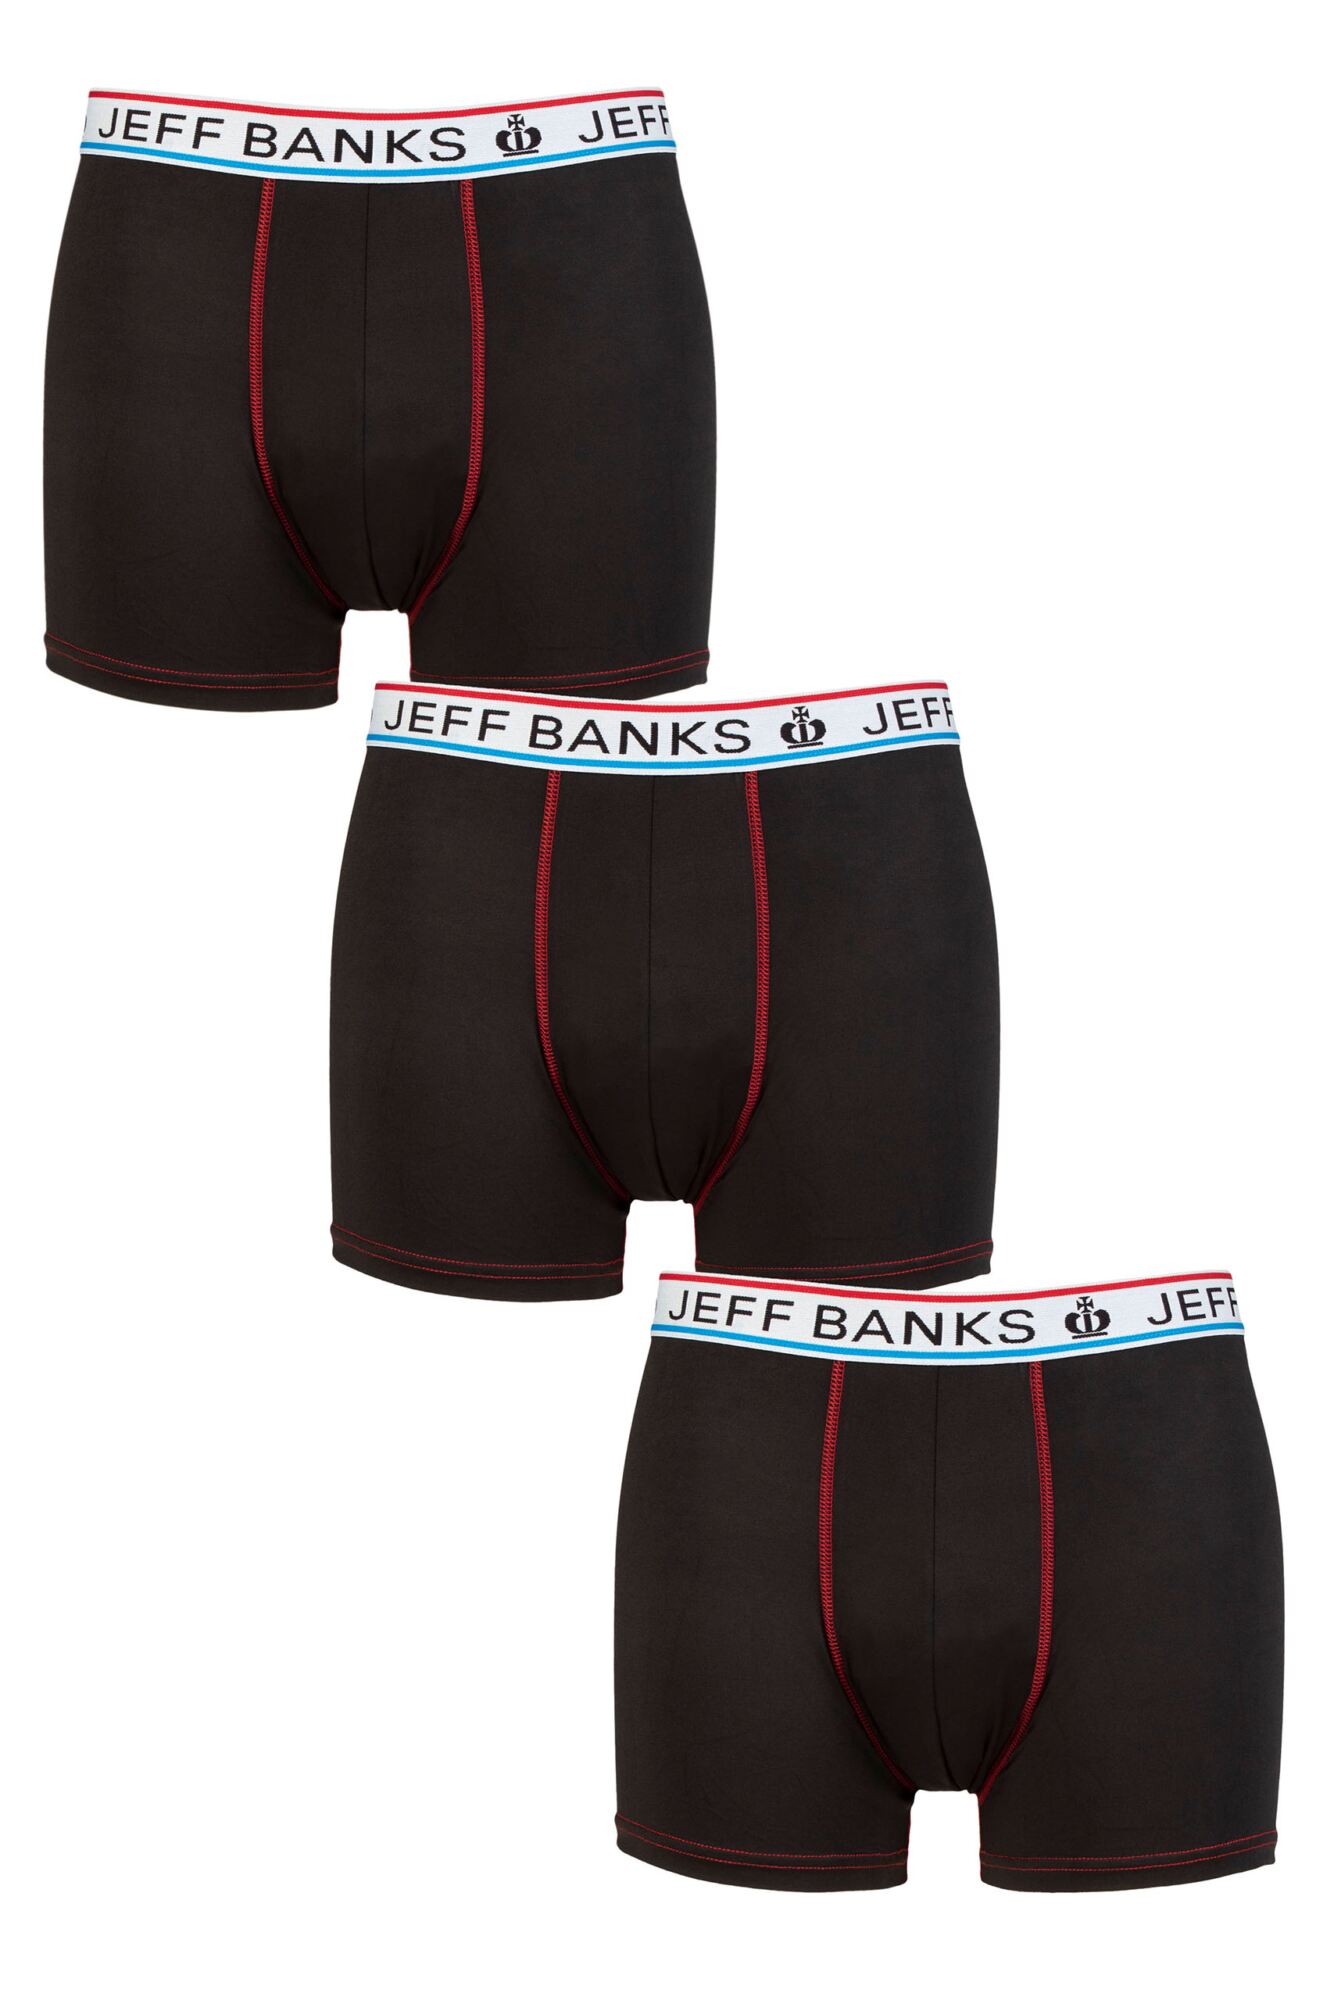 Mens 3 Pack Jeff Banks Sports Underwear from SockShop